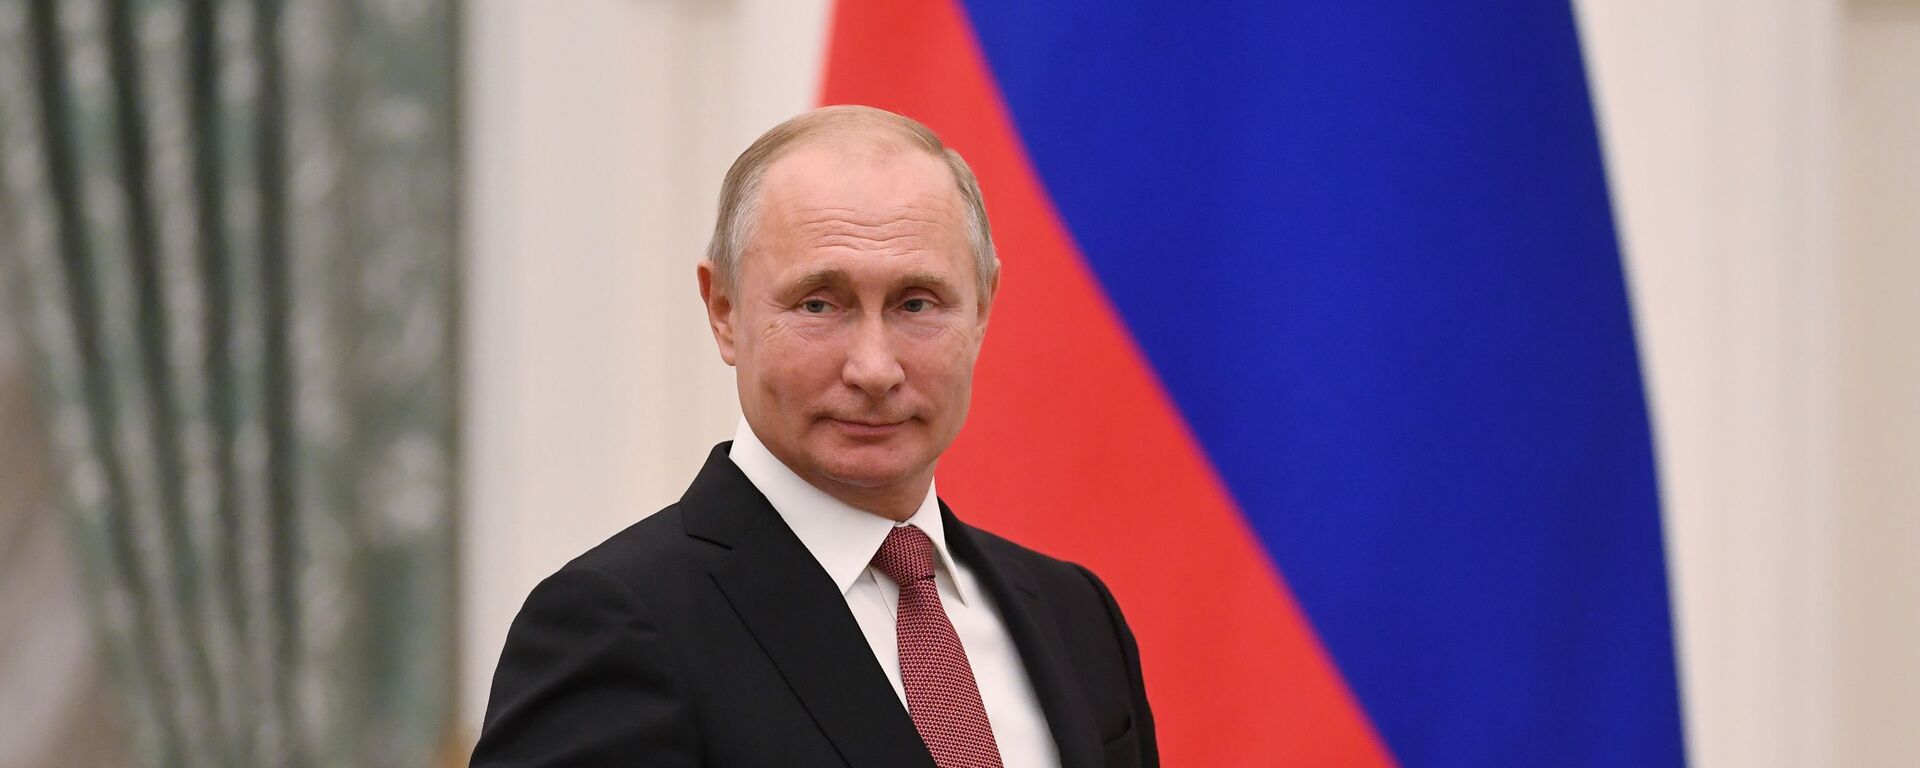 Tổng thống Nga Vladimir Putin. - Sputnik Việt Nam, 1920, 11.10.2020